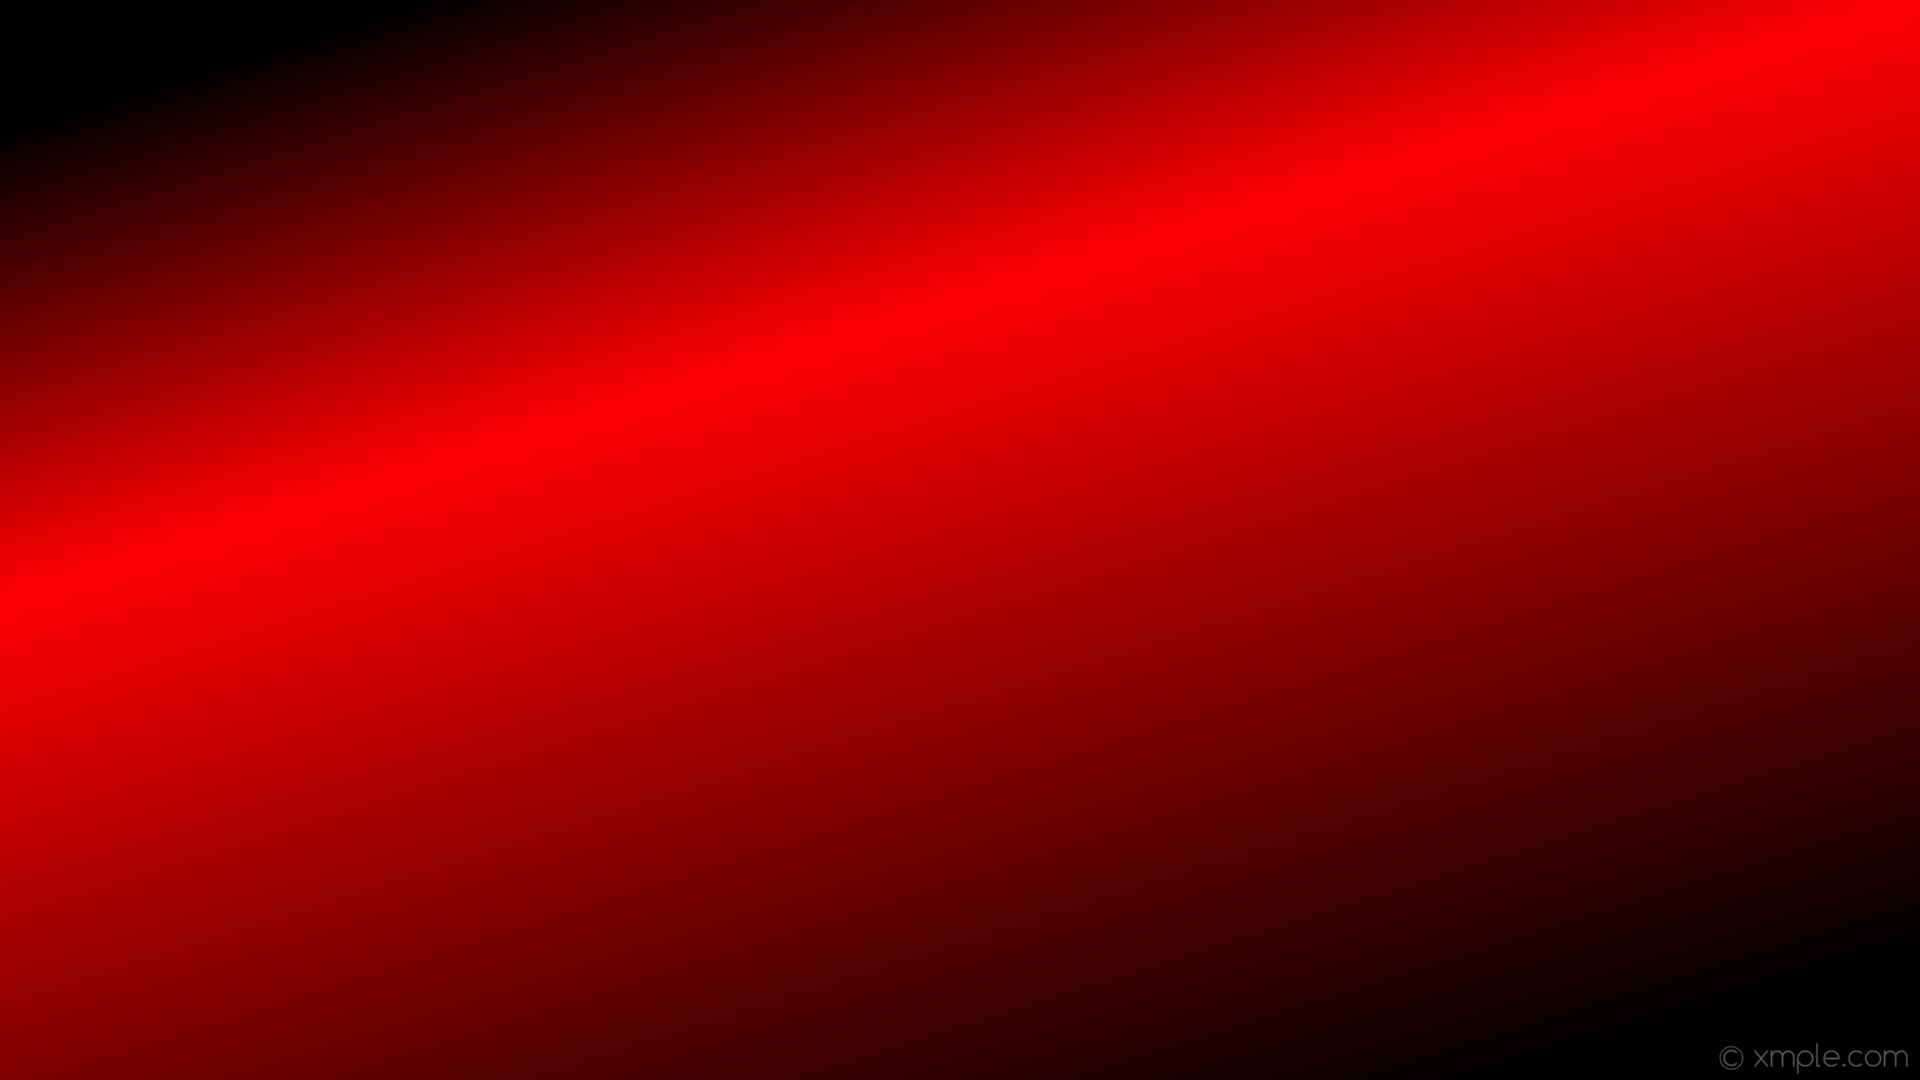 1920x1080 wallpaper linear red black gradient highlight #000000 #ff0000 315Â° 67%